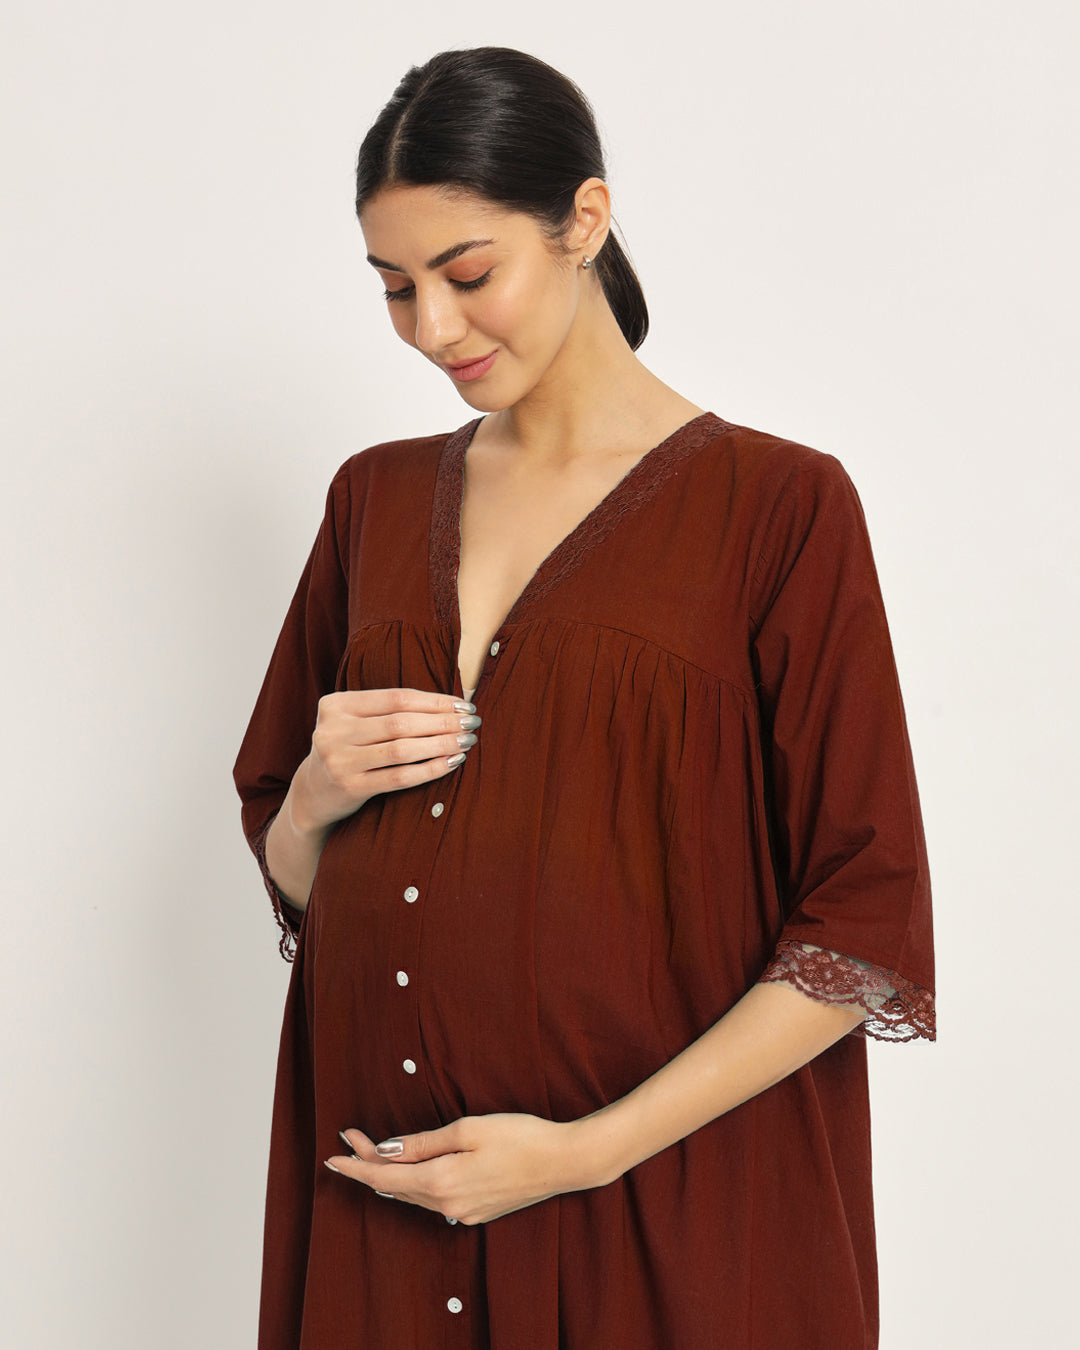 Russet Red Preggo & Posh Maternity & Nursing Dress